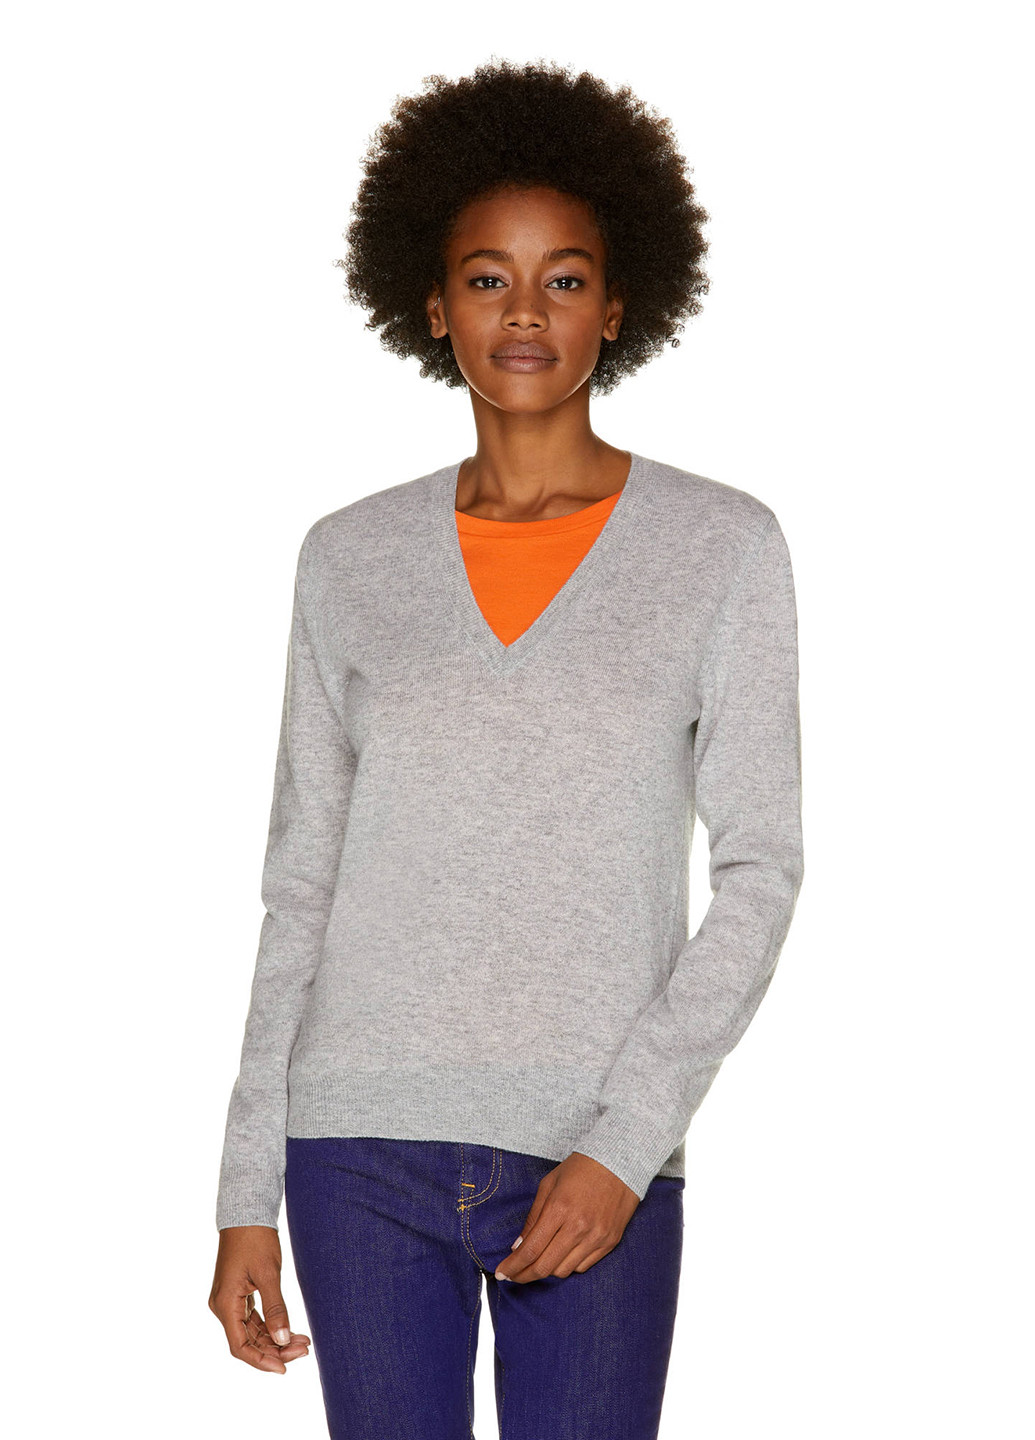 Серый демисезонный пуловер пуловер United Colors of Benetton